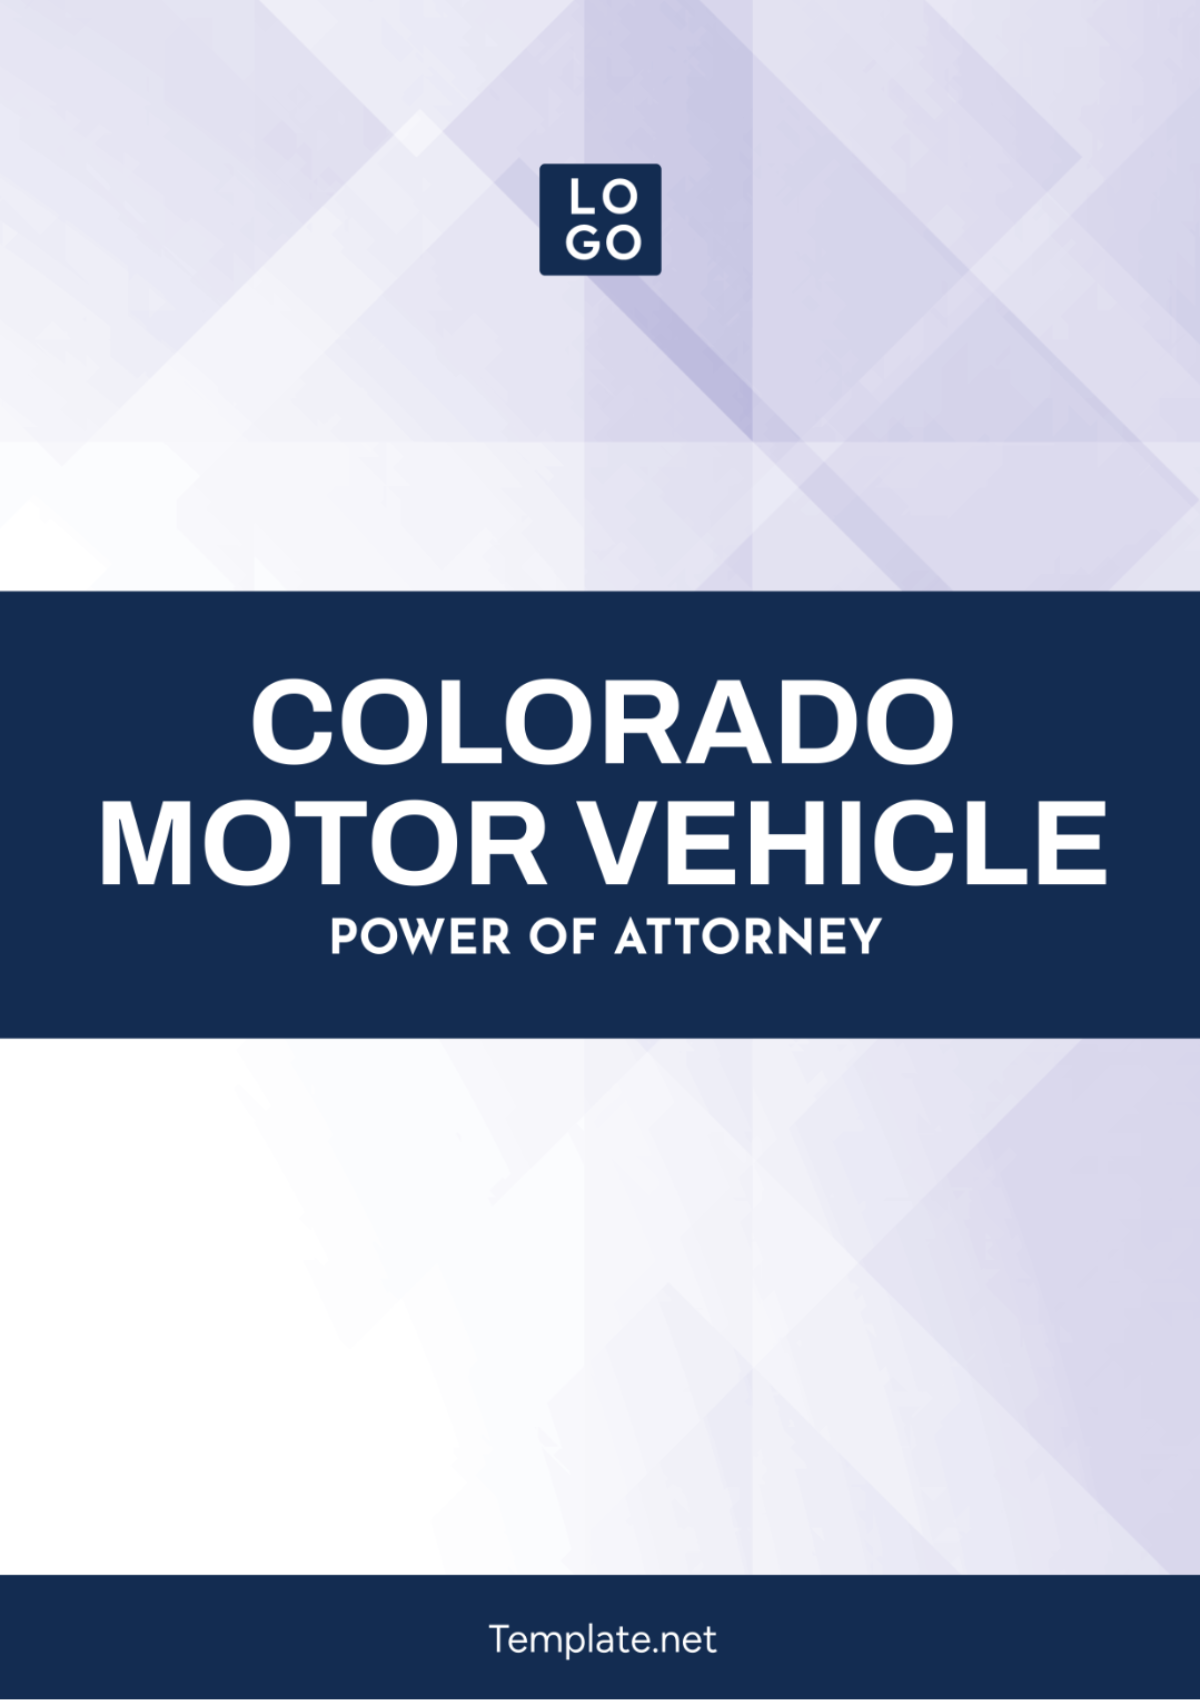 Colorado Motor Vehicle Power of Attorney Template